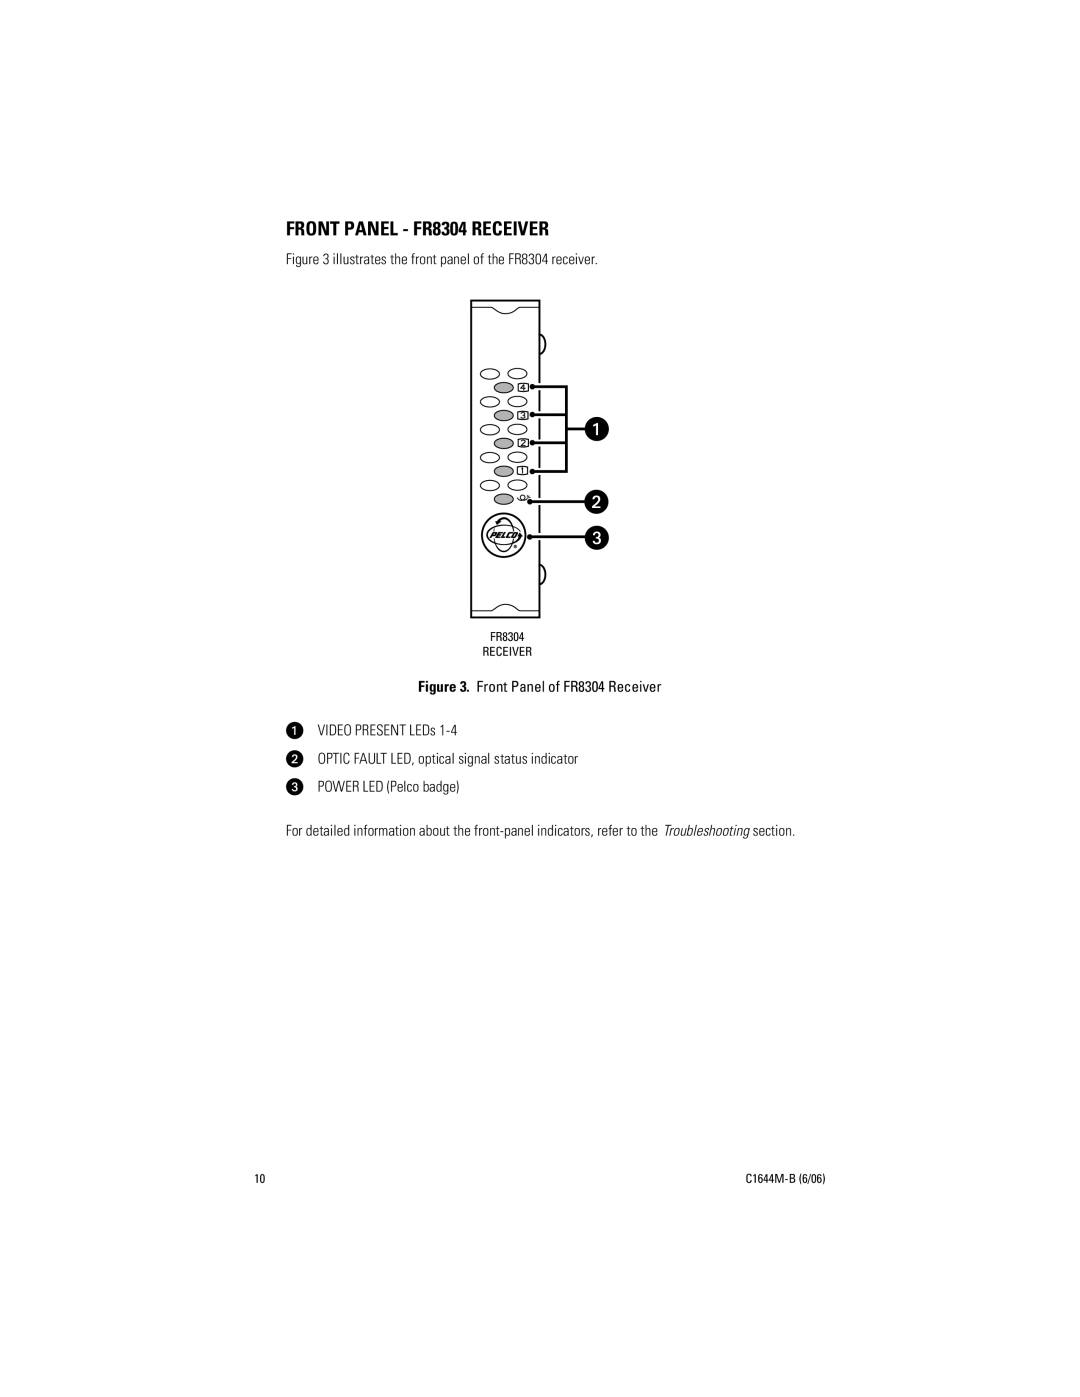 Pelco manual FRONT PANEL - FR8304 RECEIVER, C1644M-B 6/06 